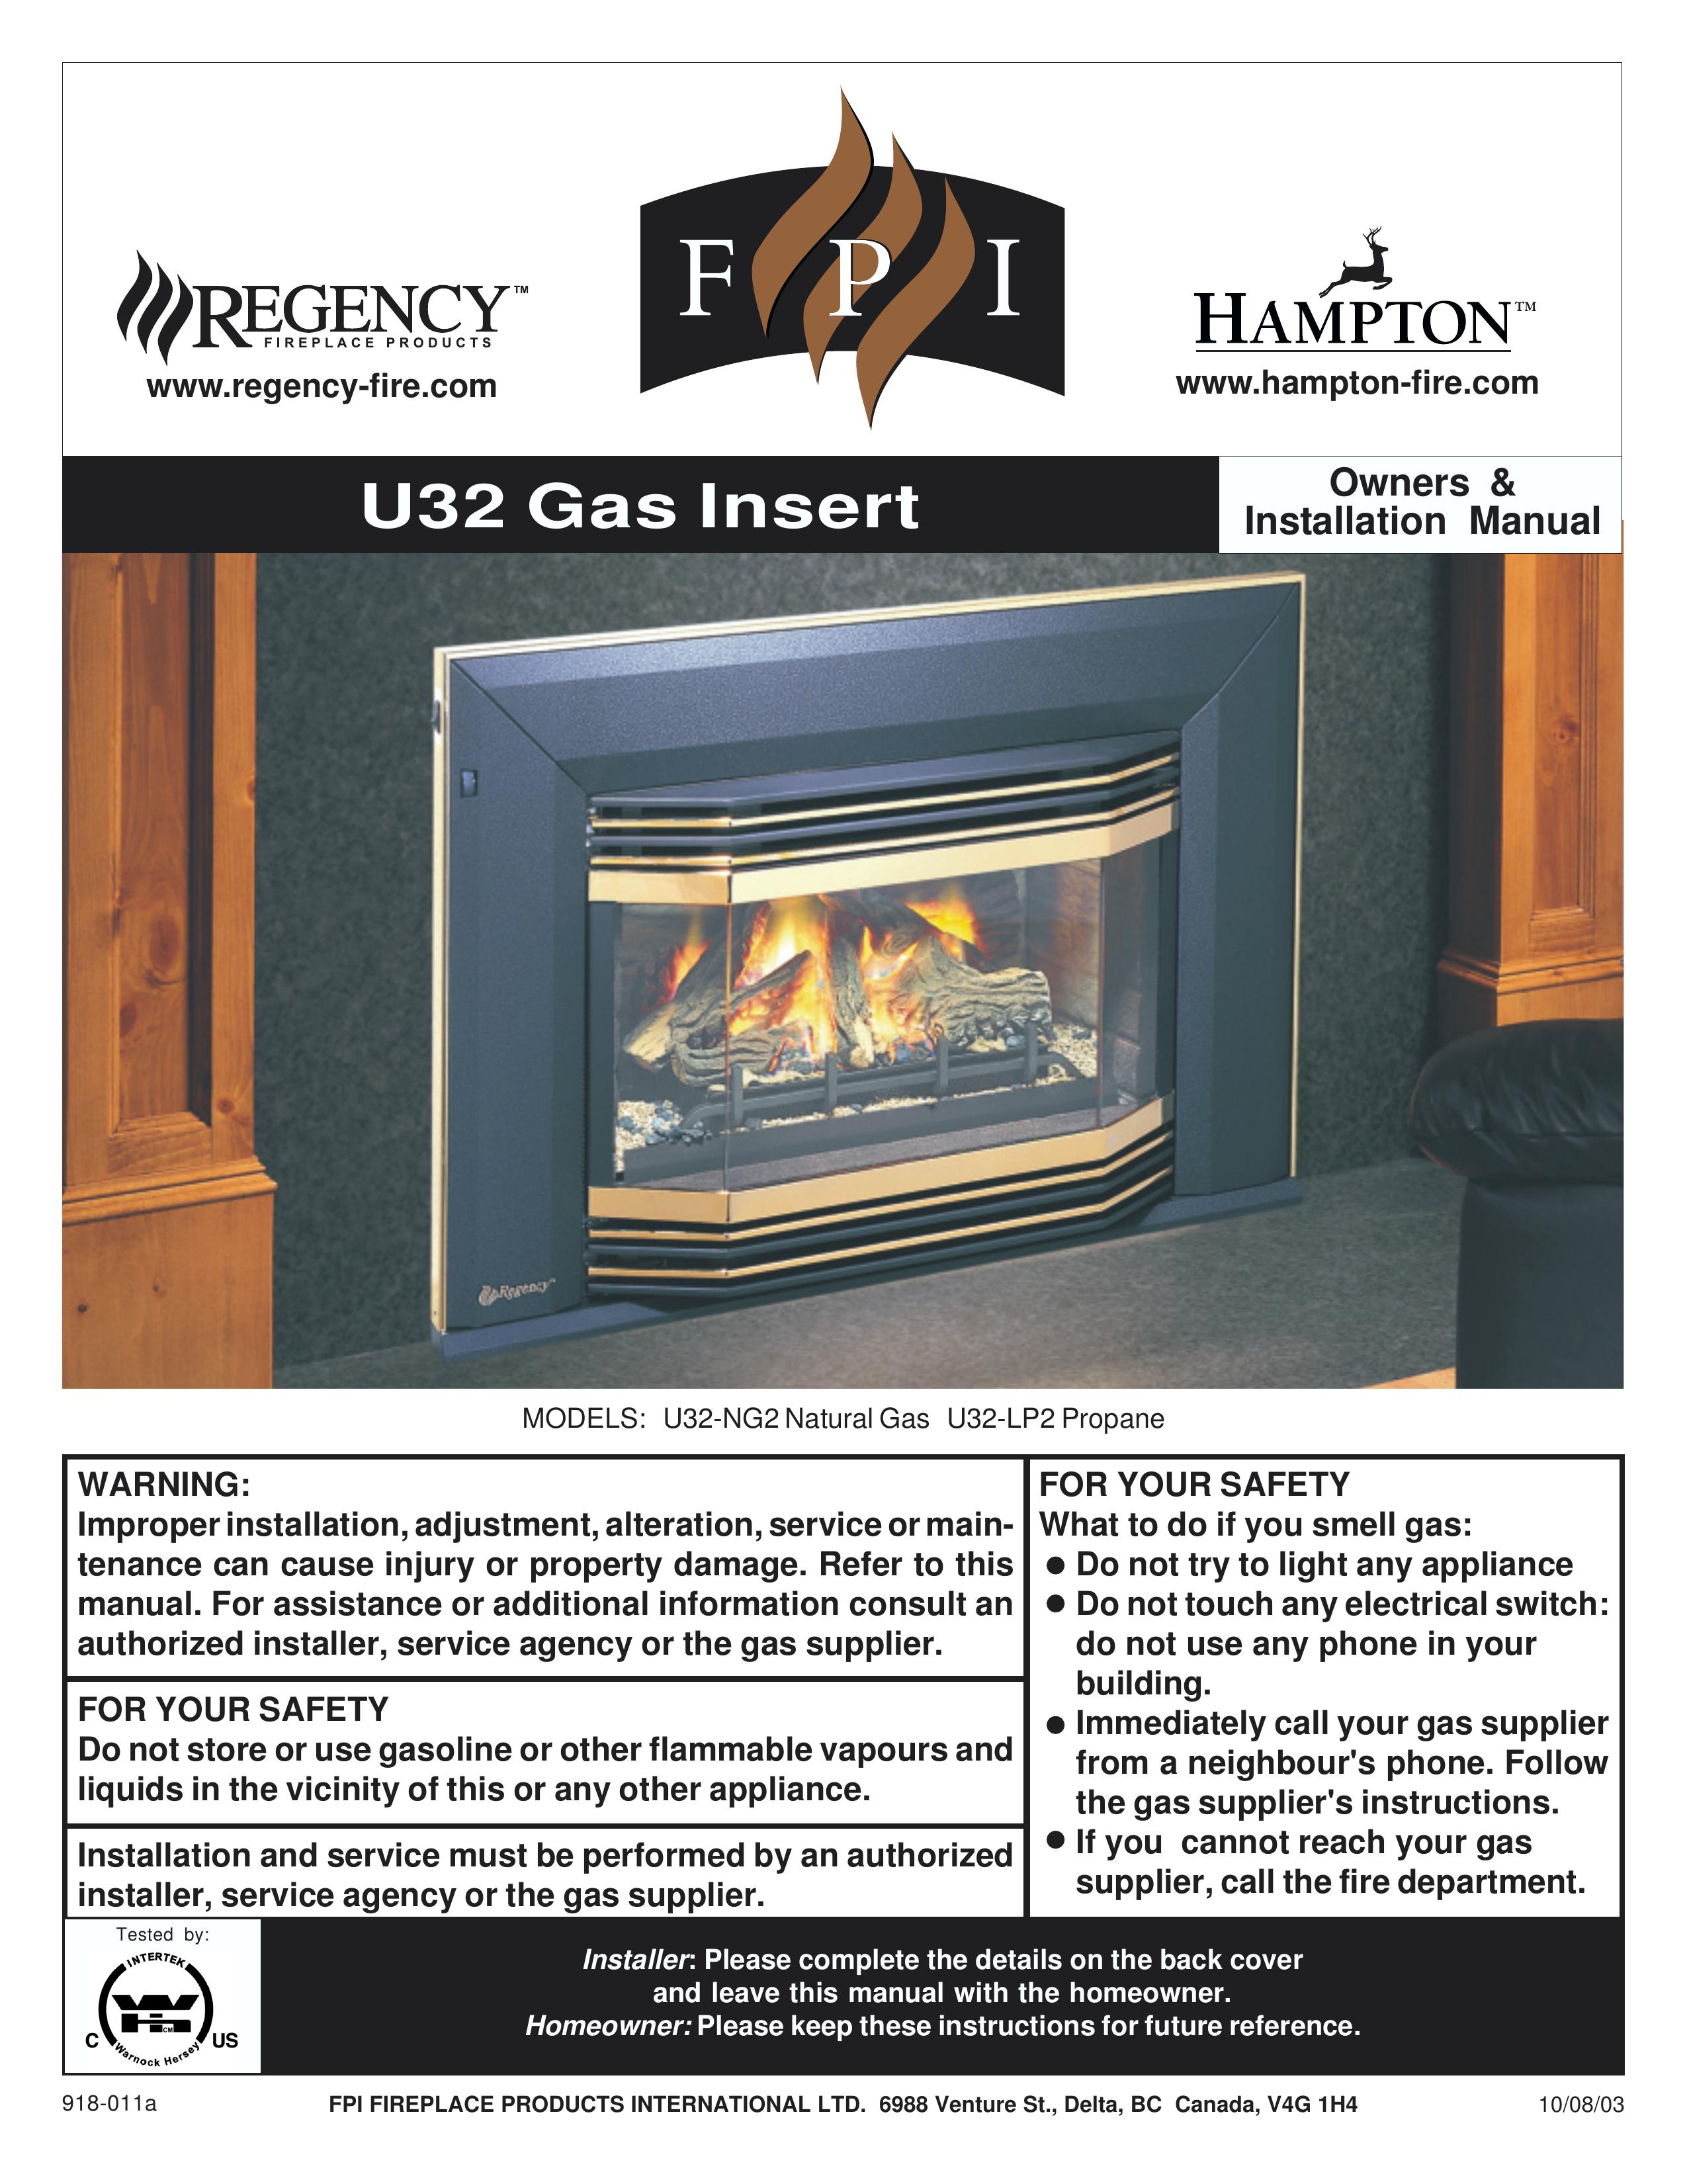 Hampton Direct U32-NG2 Fire Pit User Manual